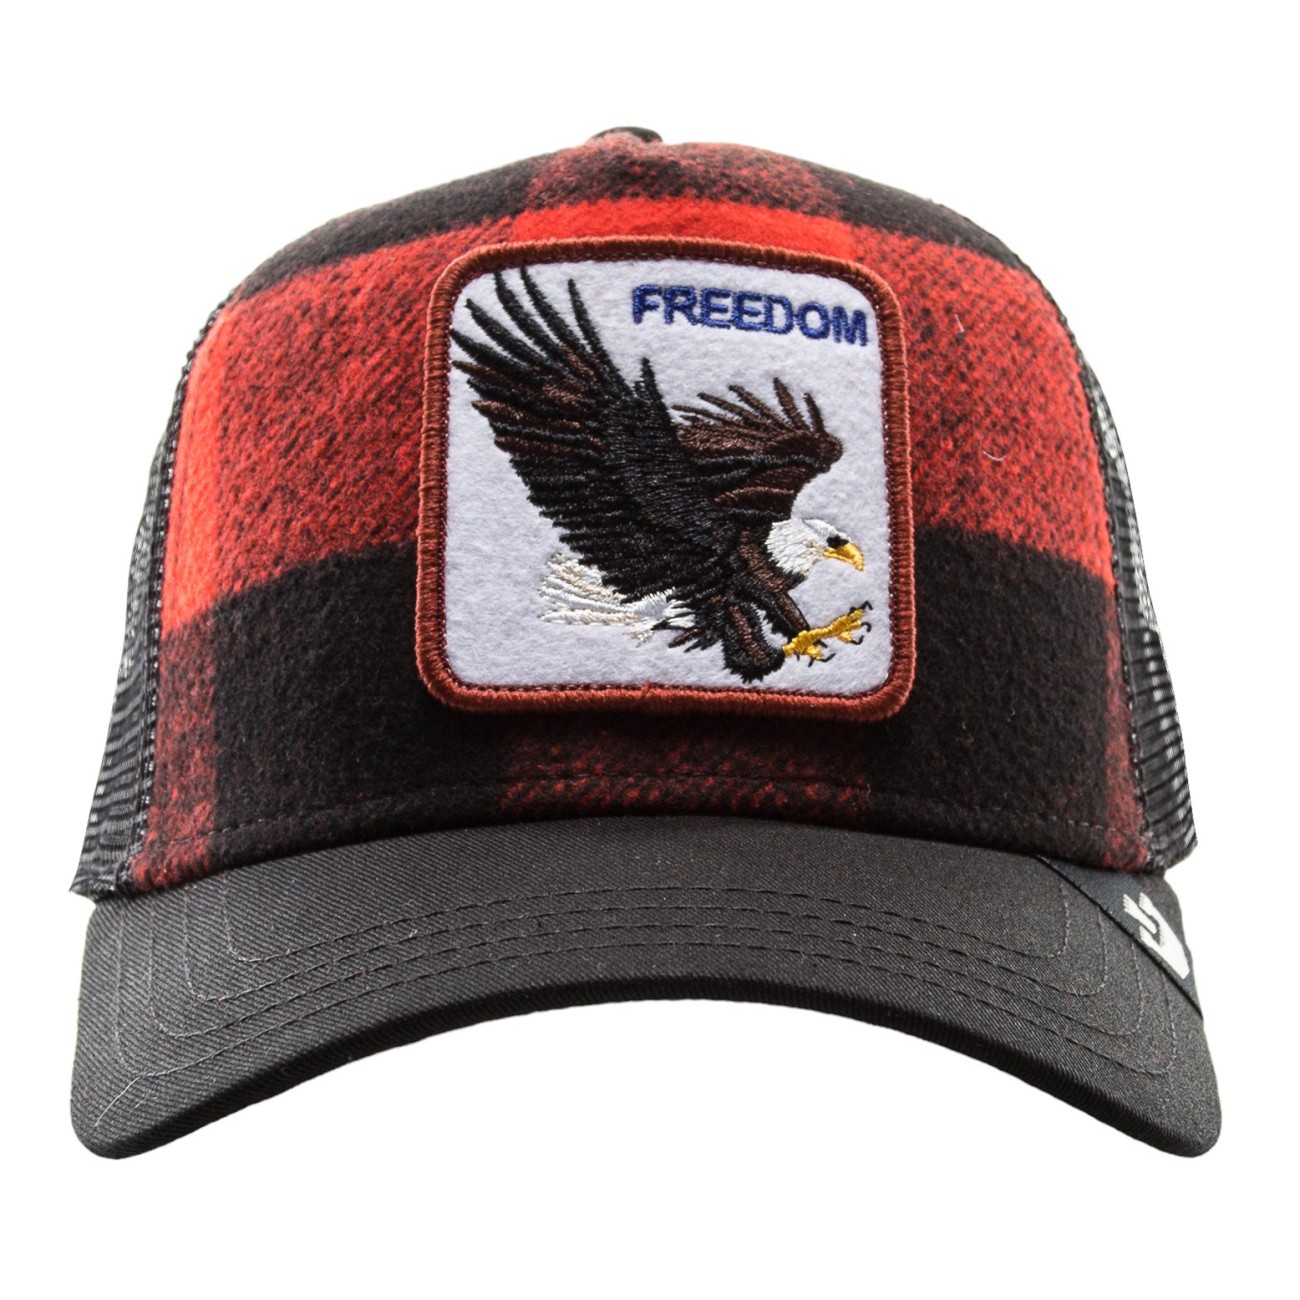 Goorin bros Freedom hat